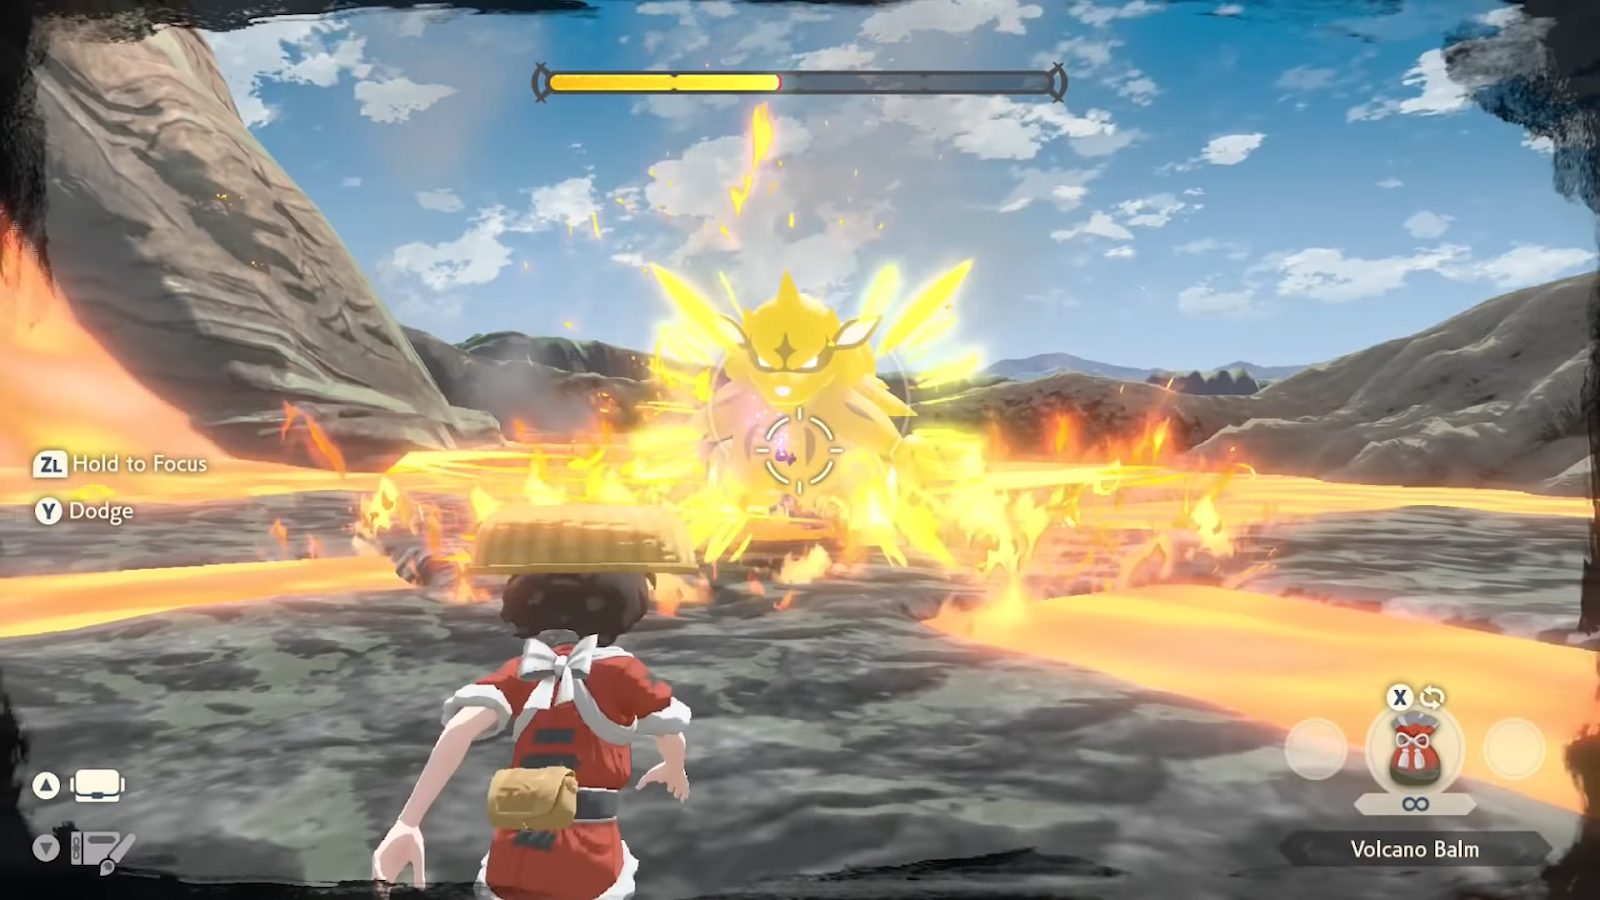 Pokémon Legends: Arceus Gameplay Trailer Highlights New Battle System